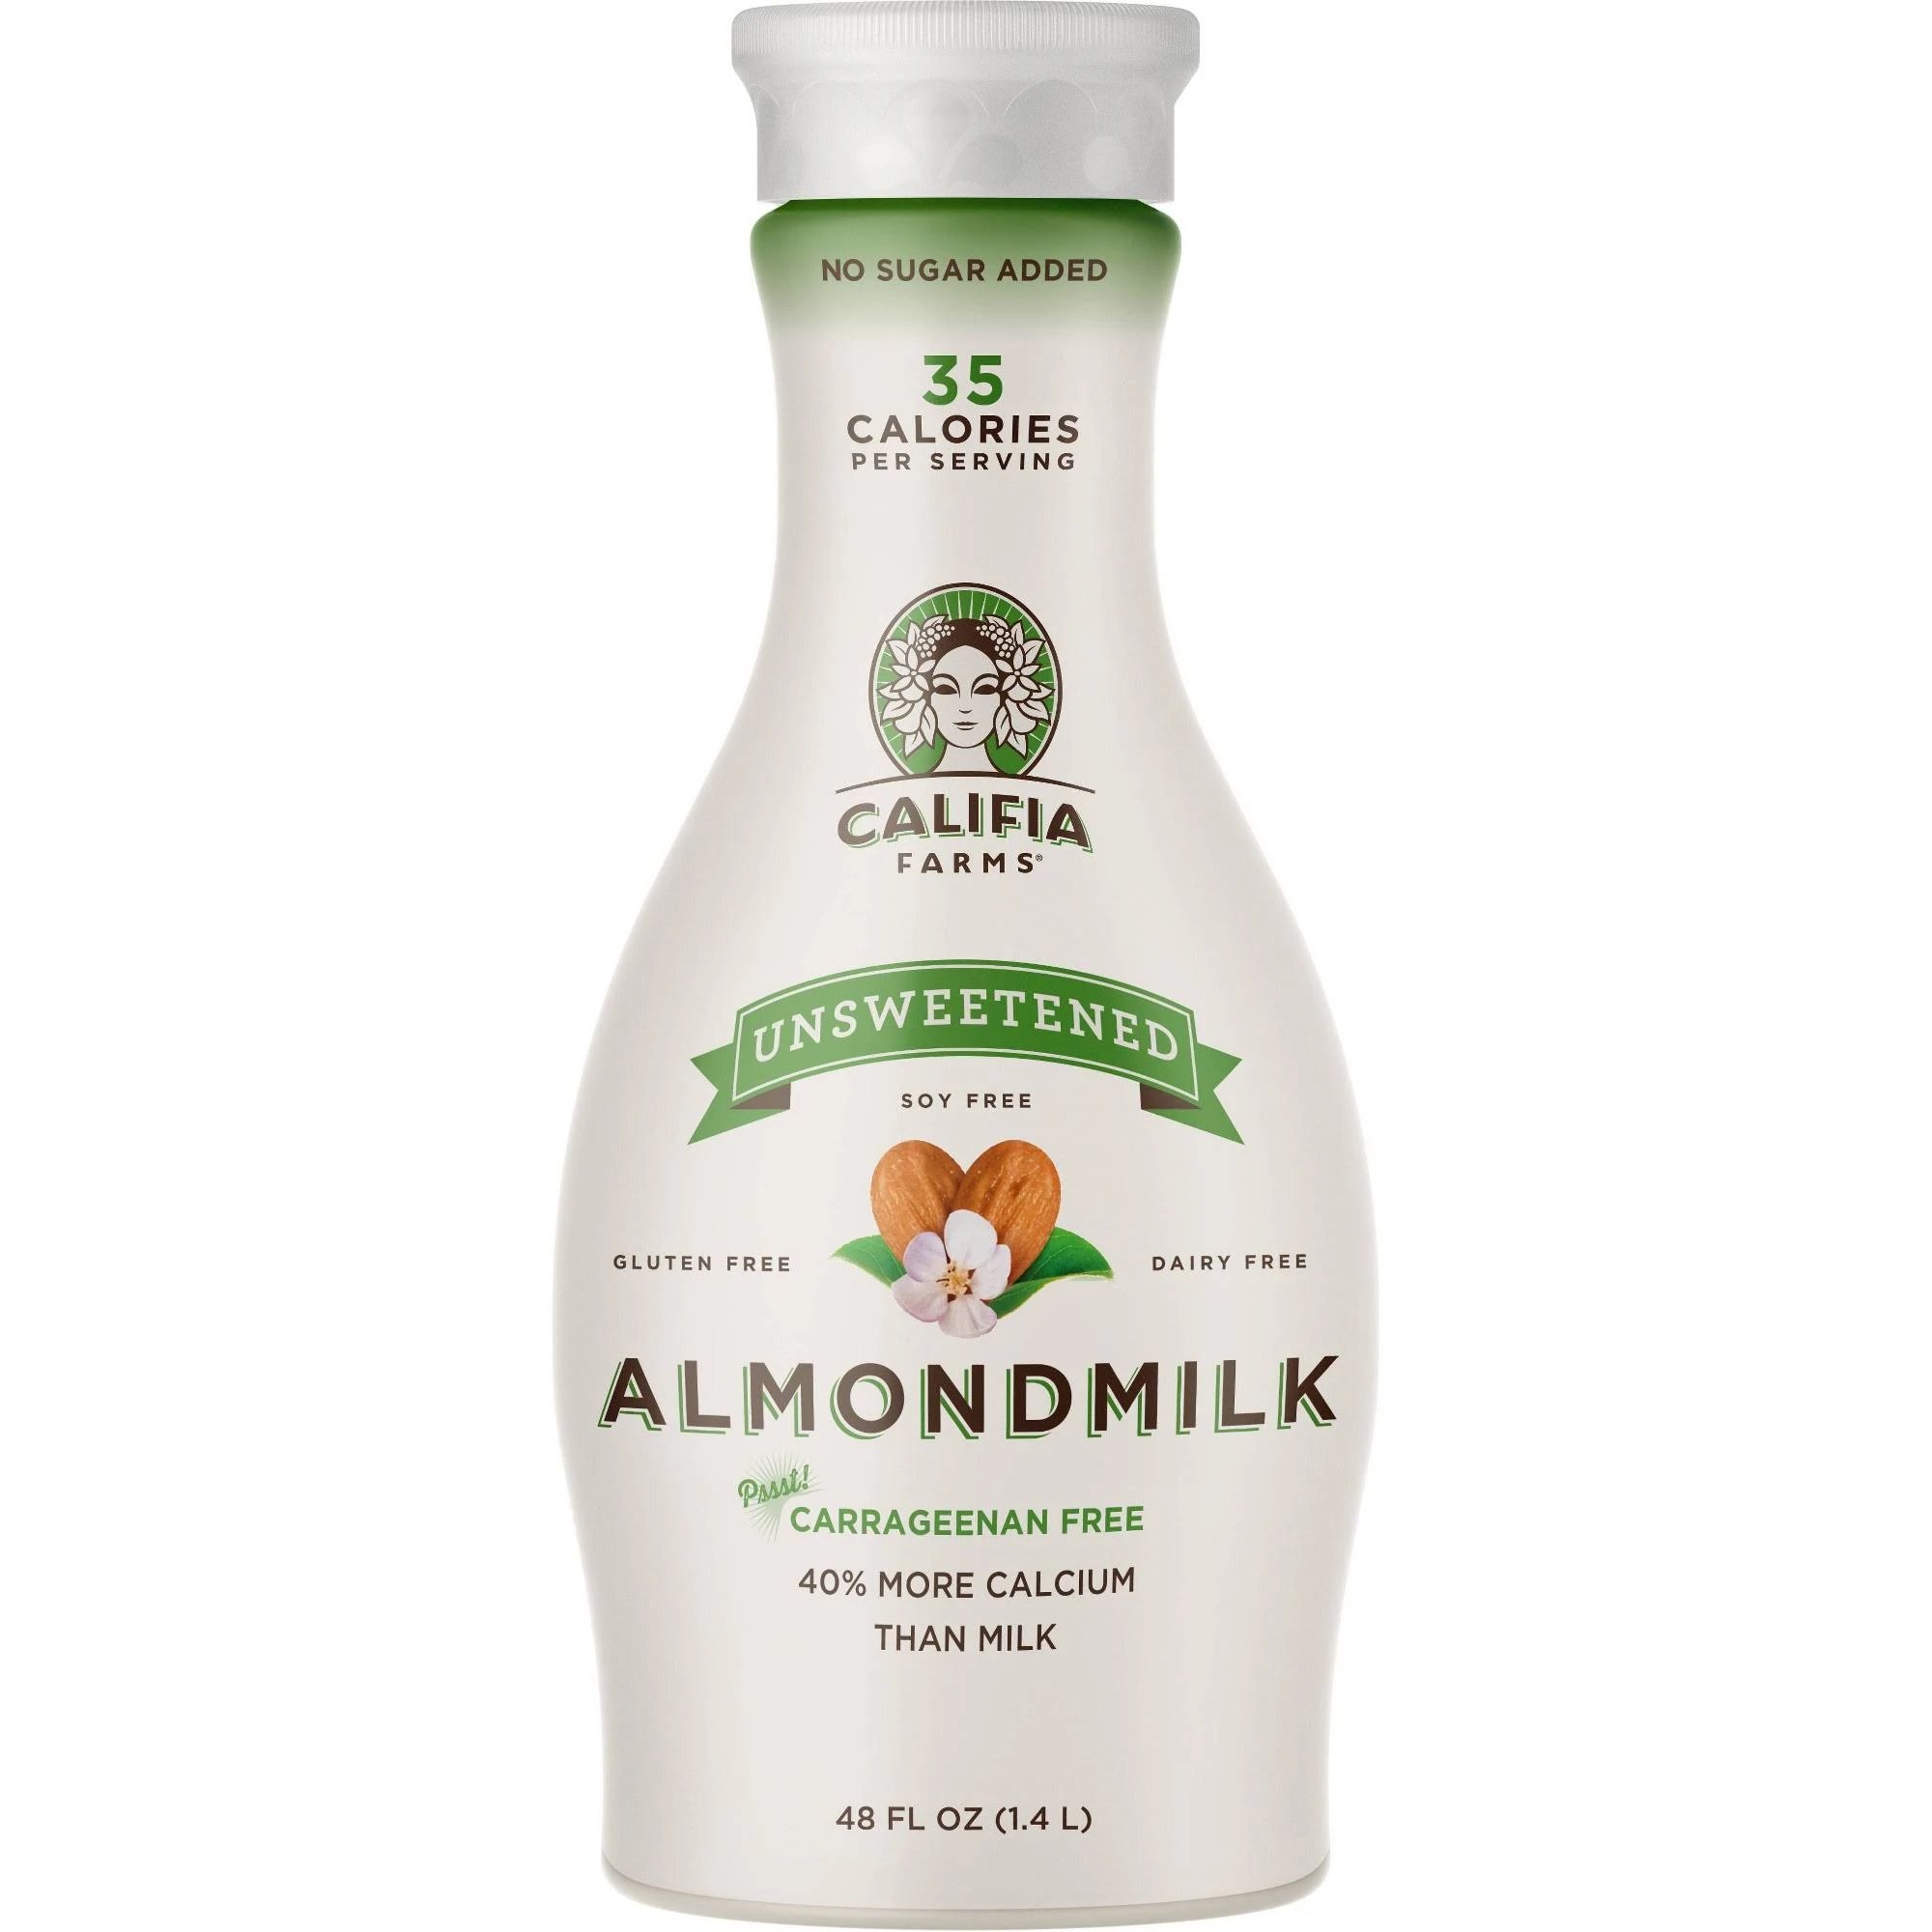 Califia Almond Milk